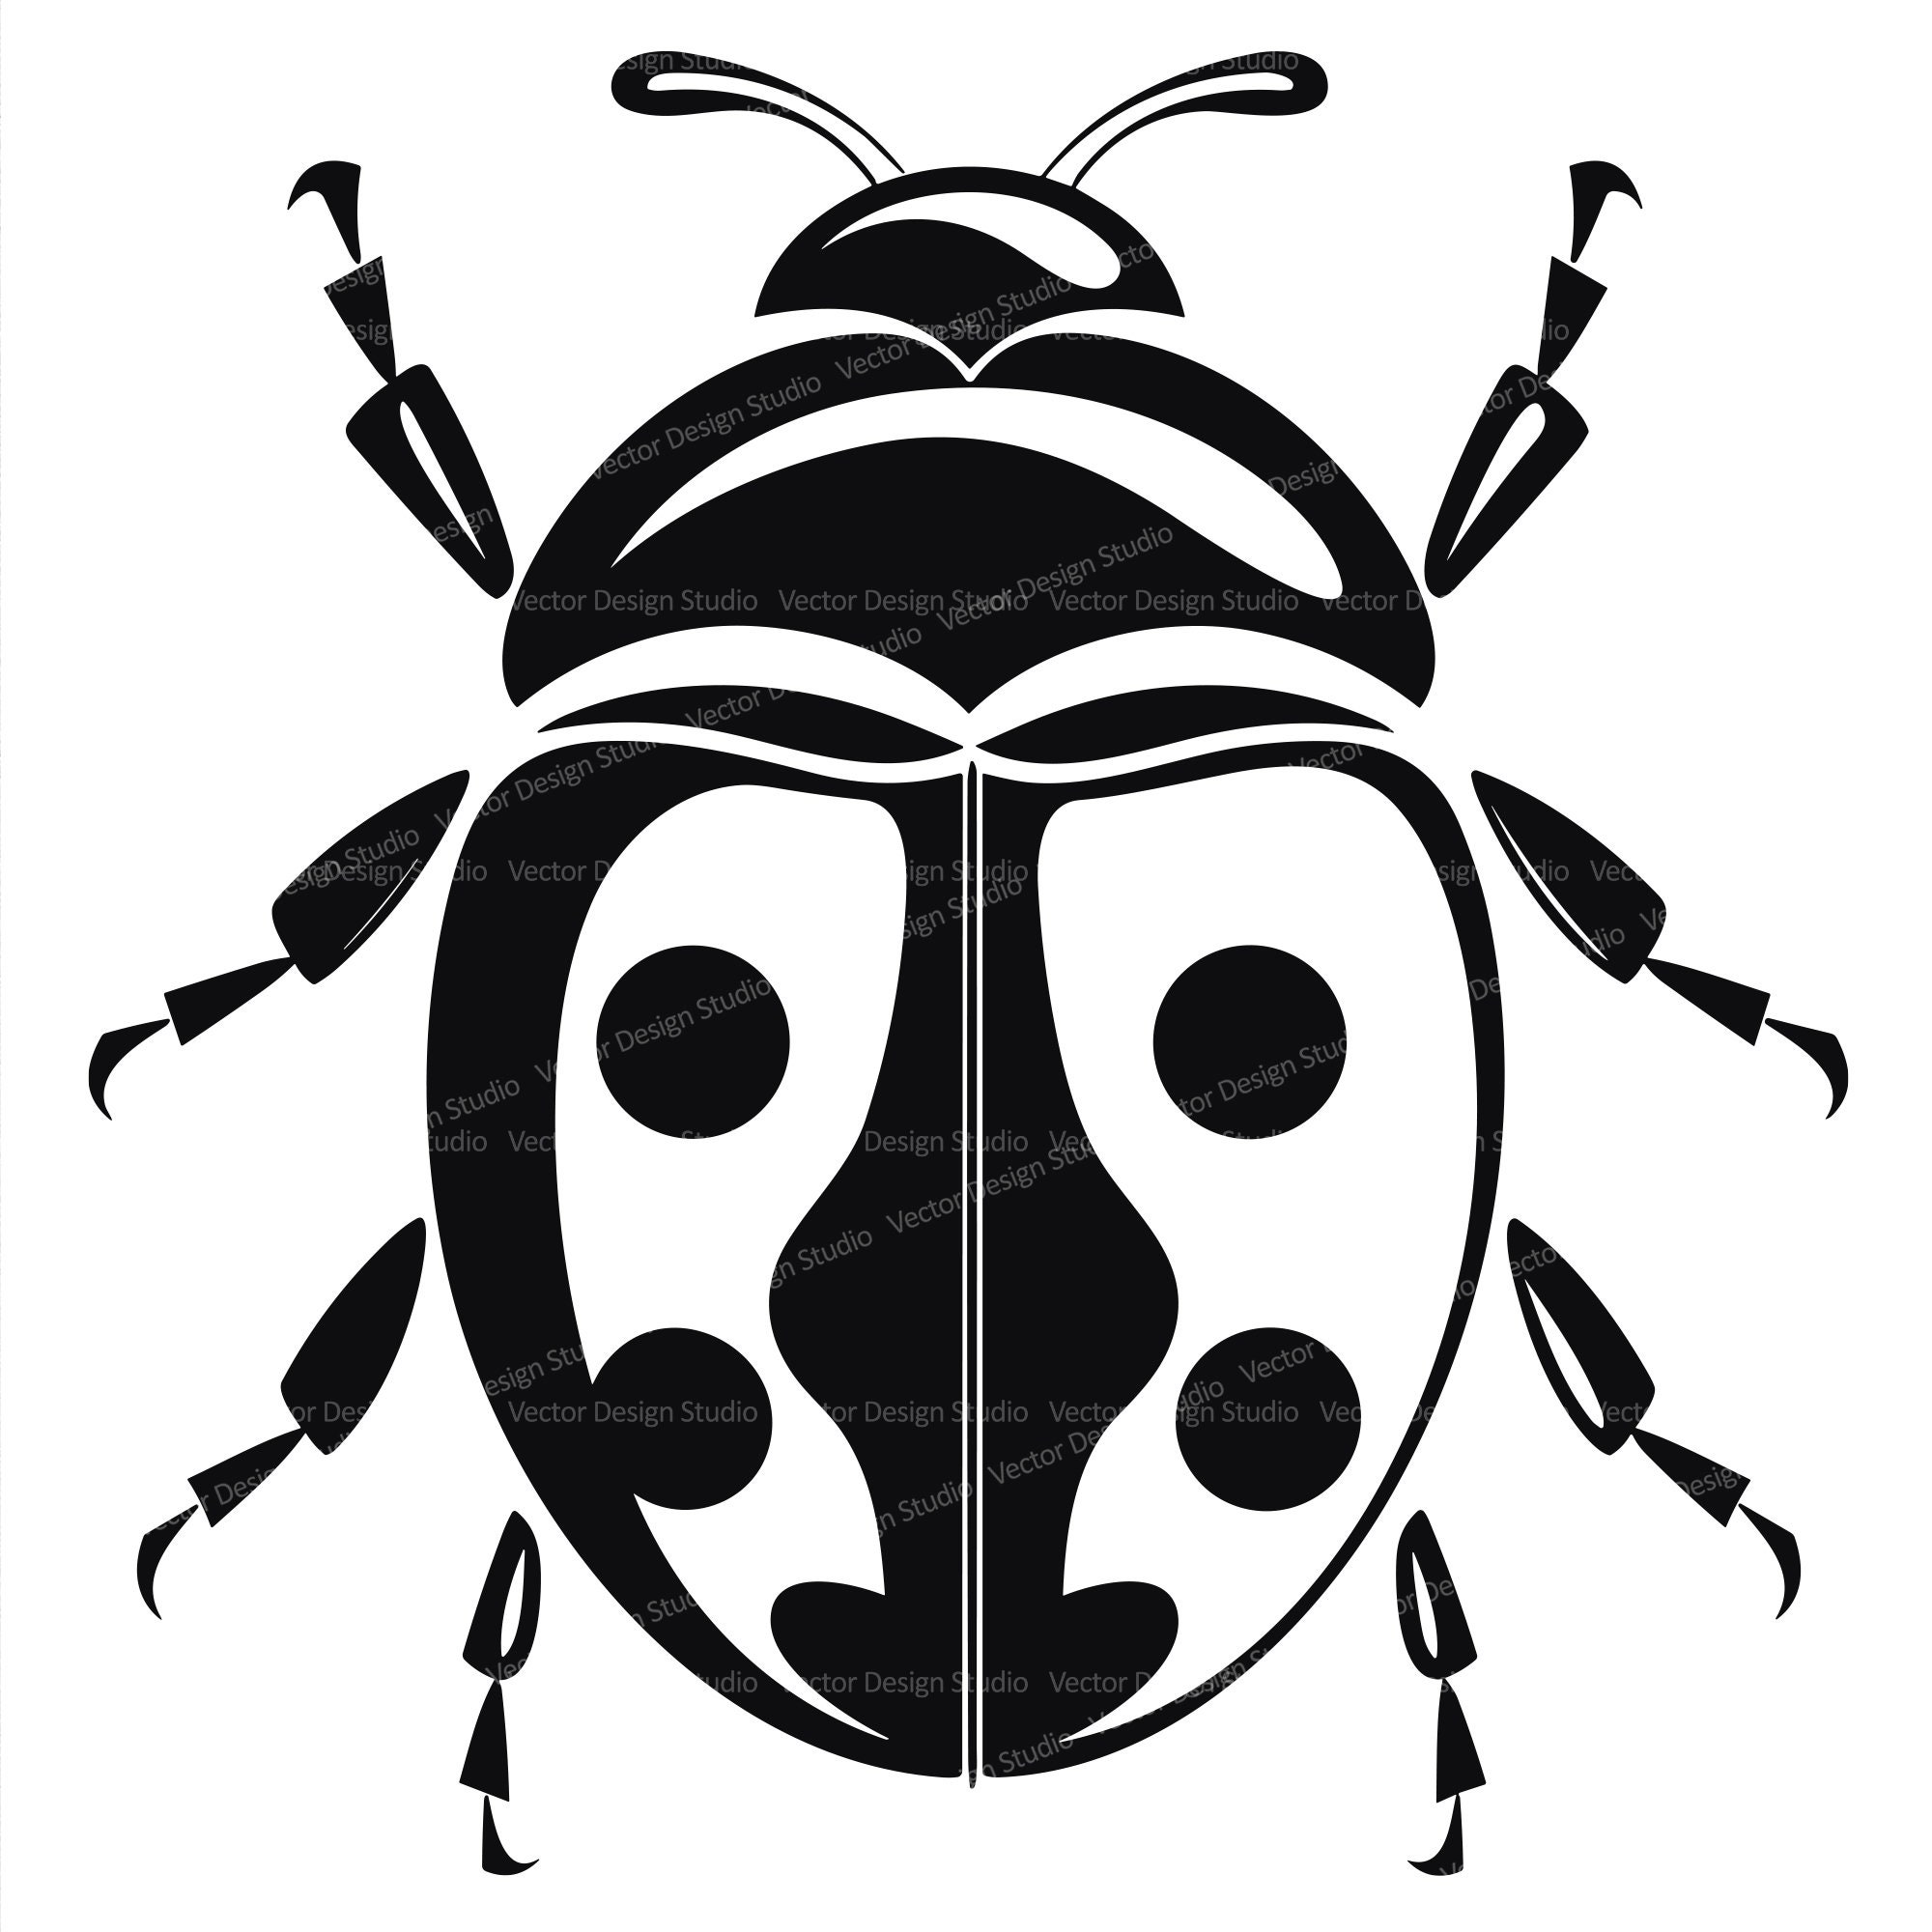 Moldura PNG Ladybug - Imagem Legal